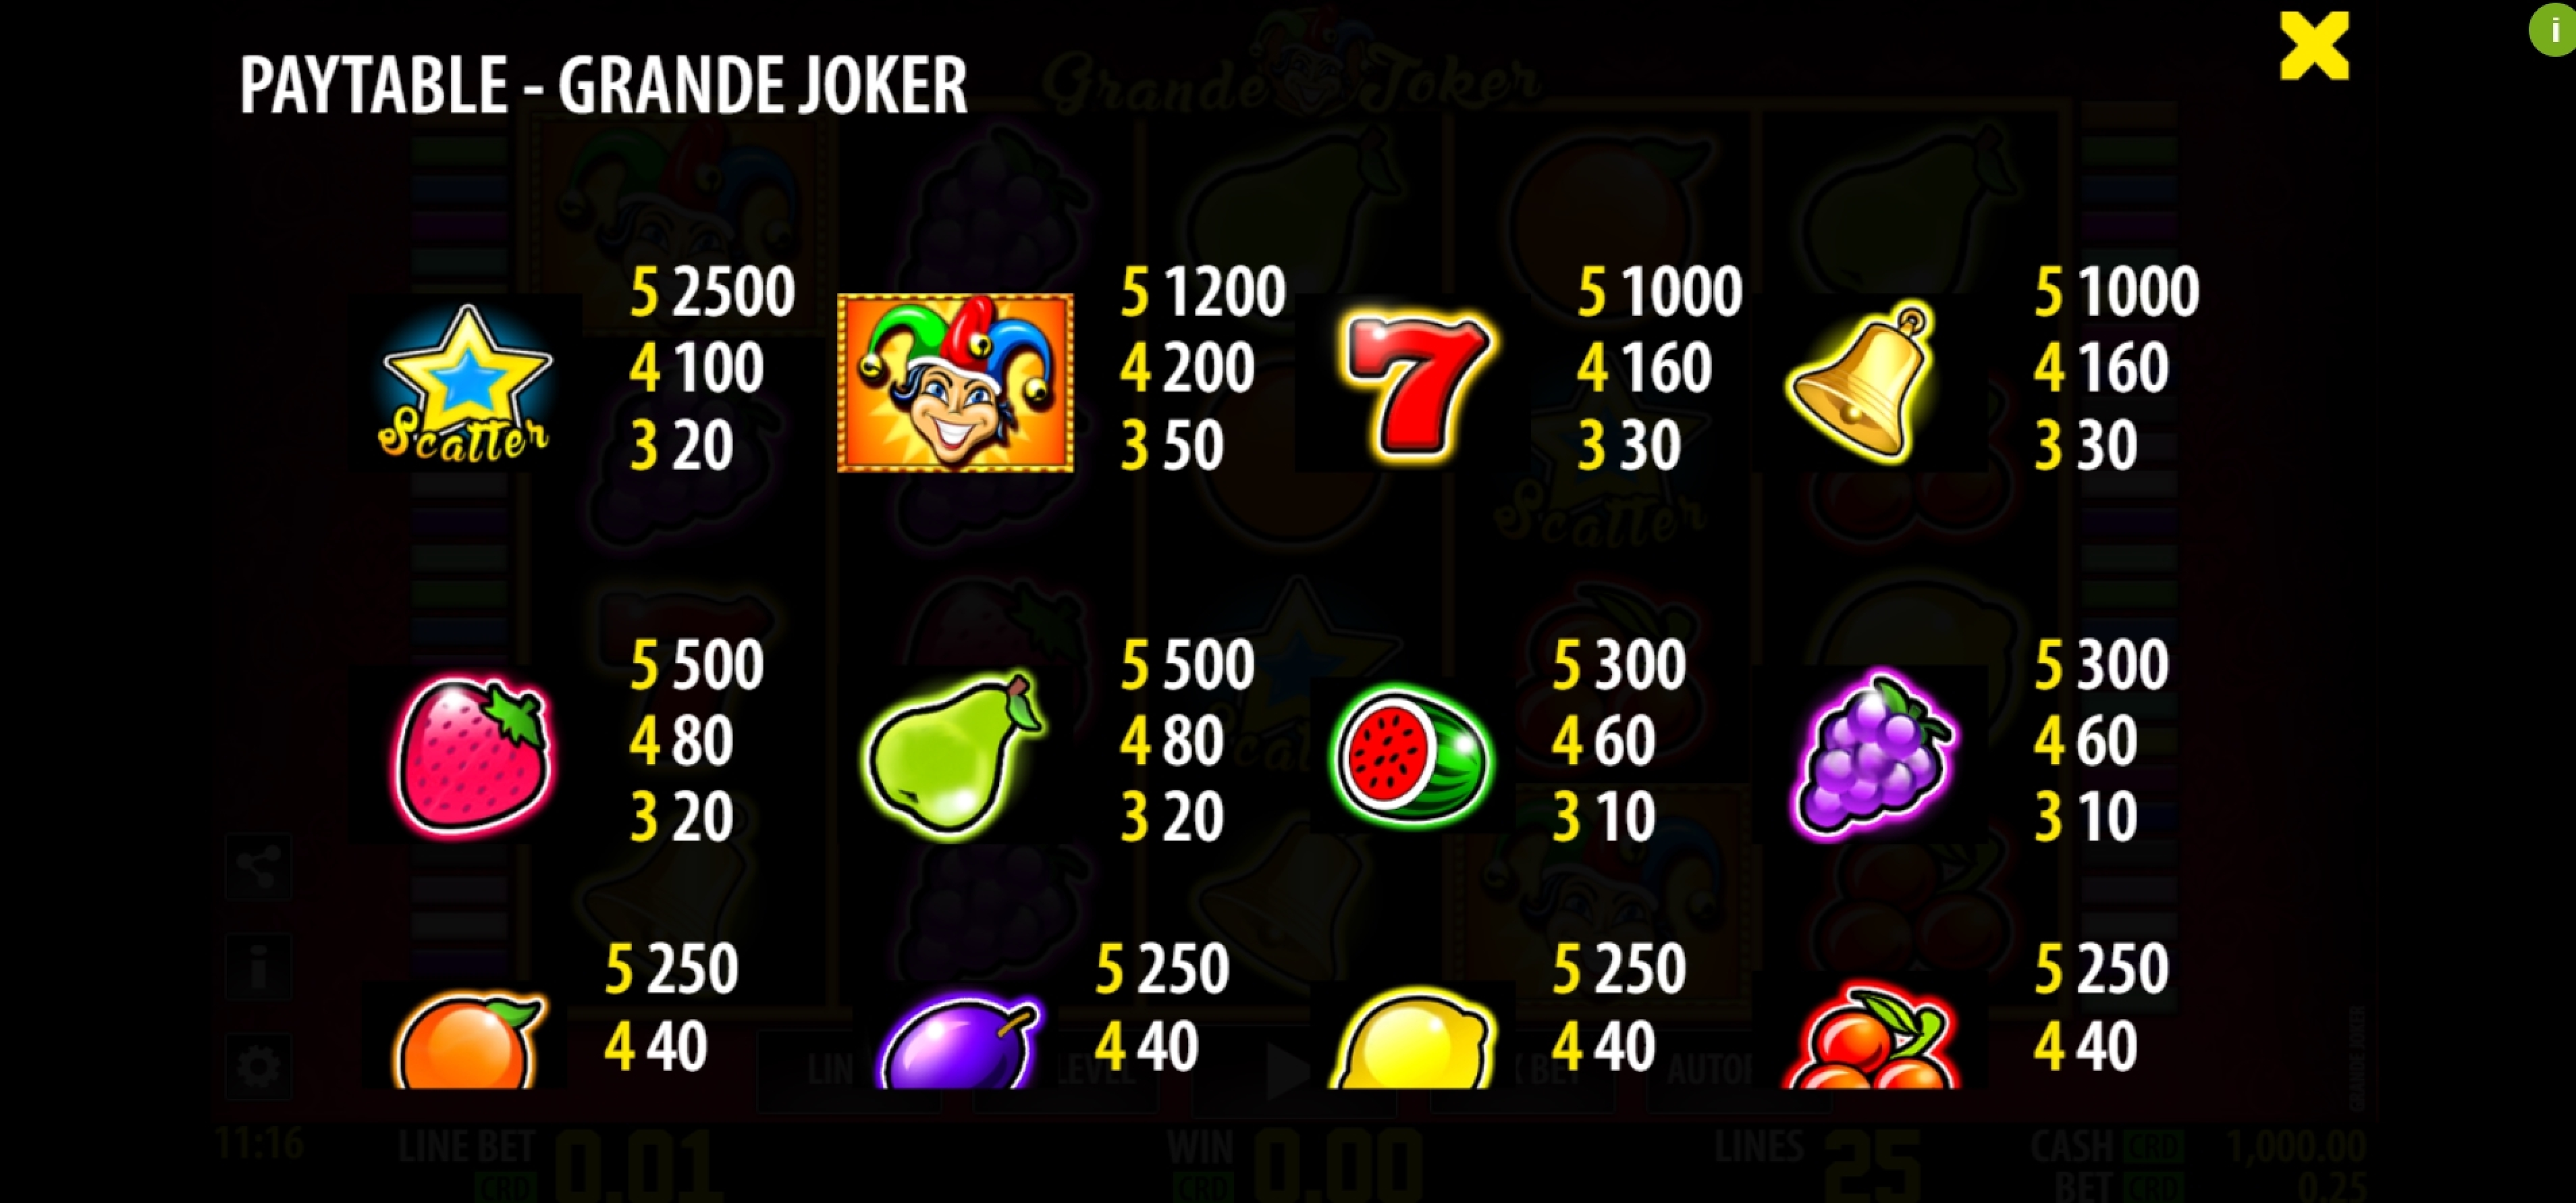 Info of Grande Joker Slot Game by Nazionale Elettronica